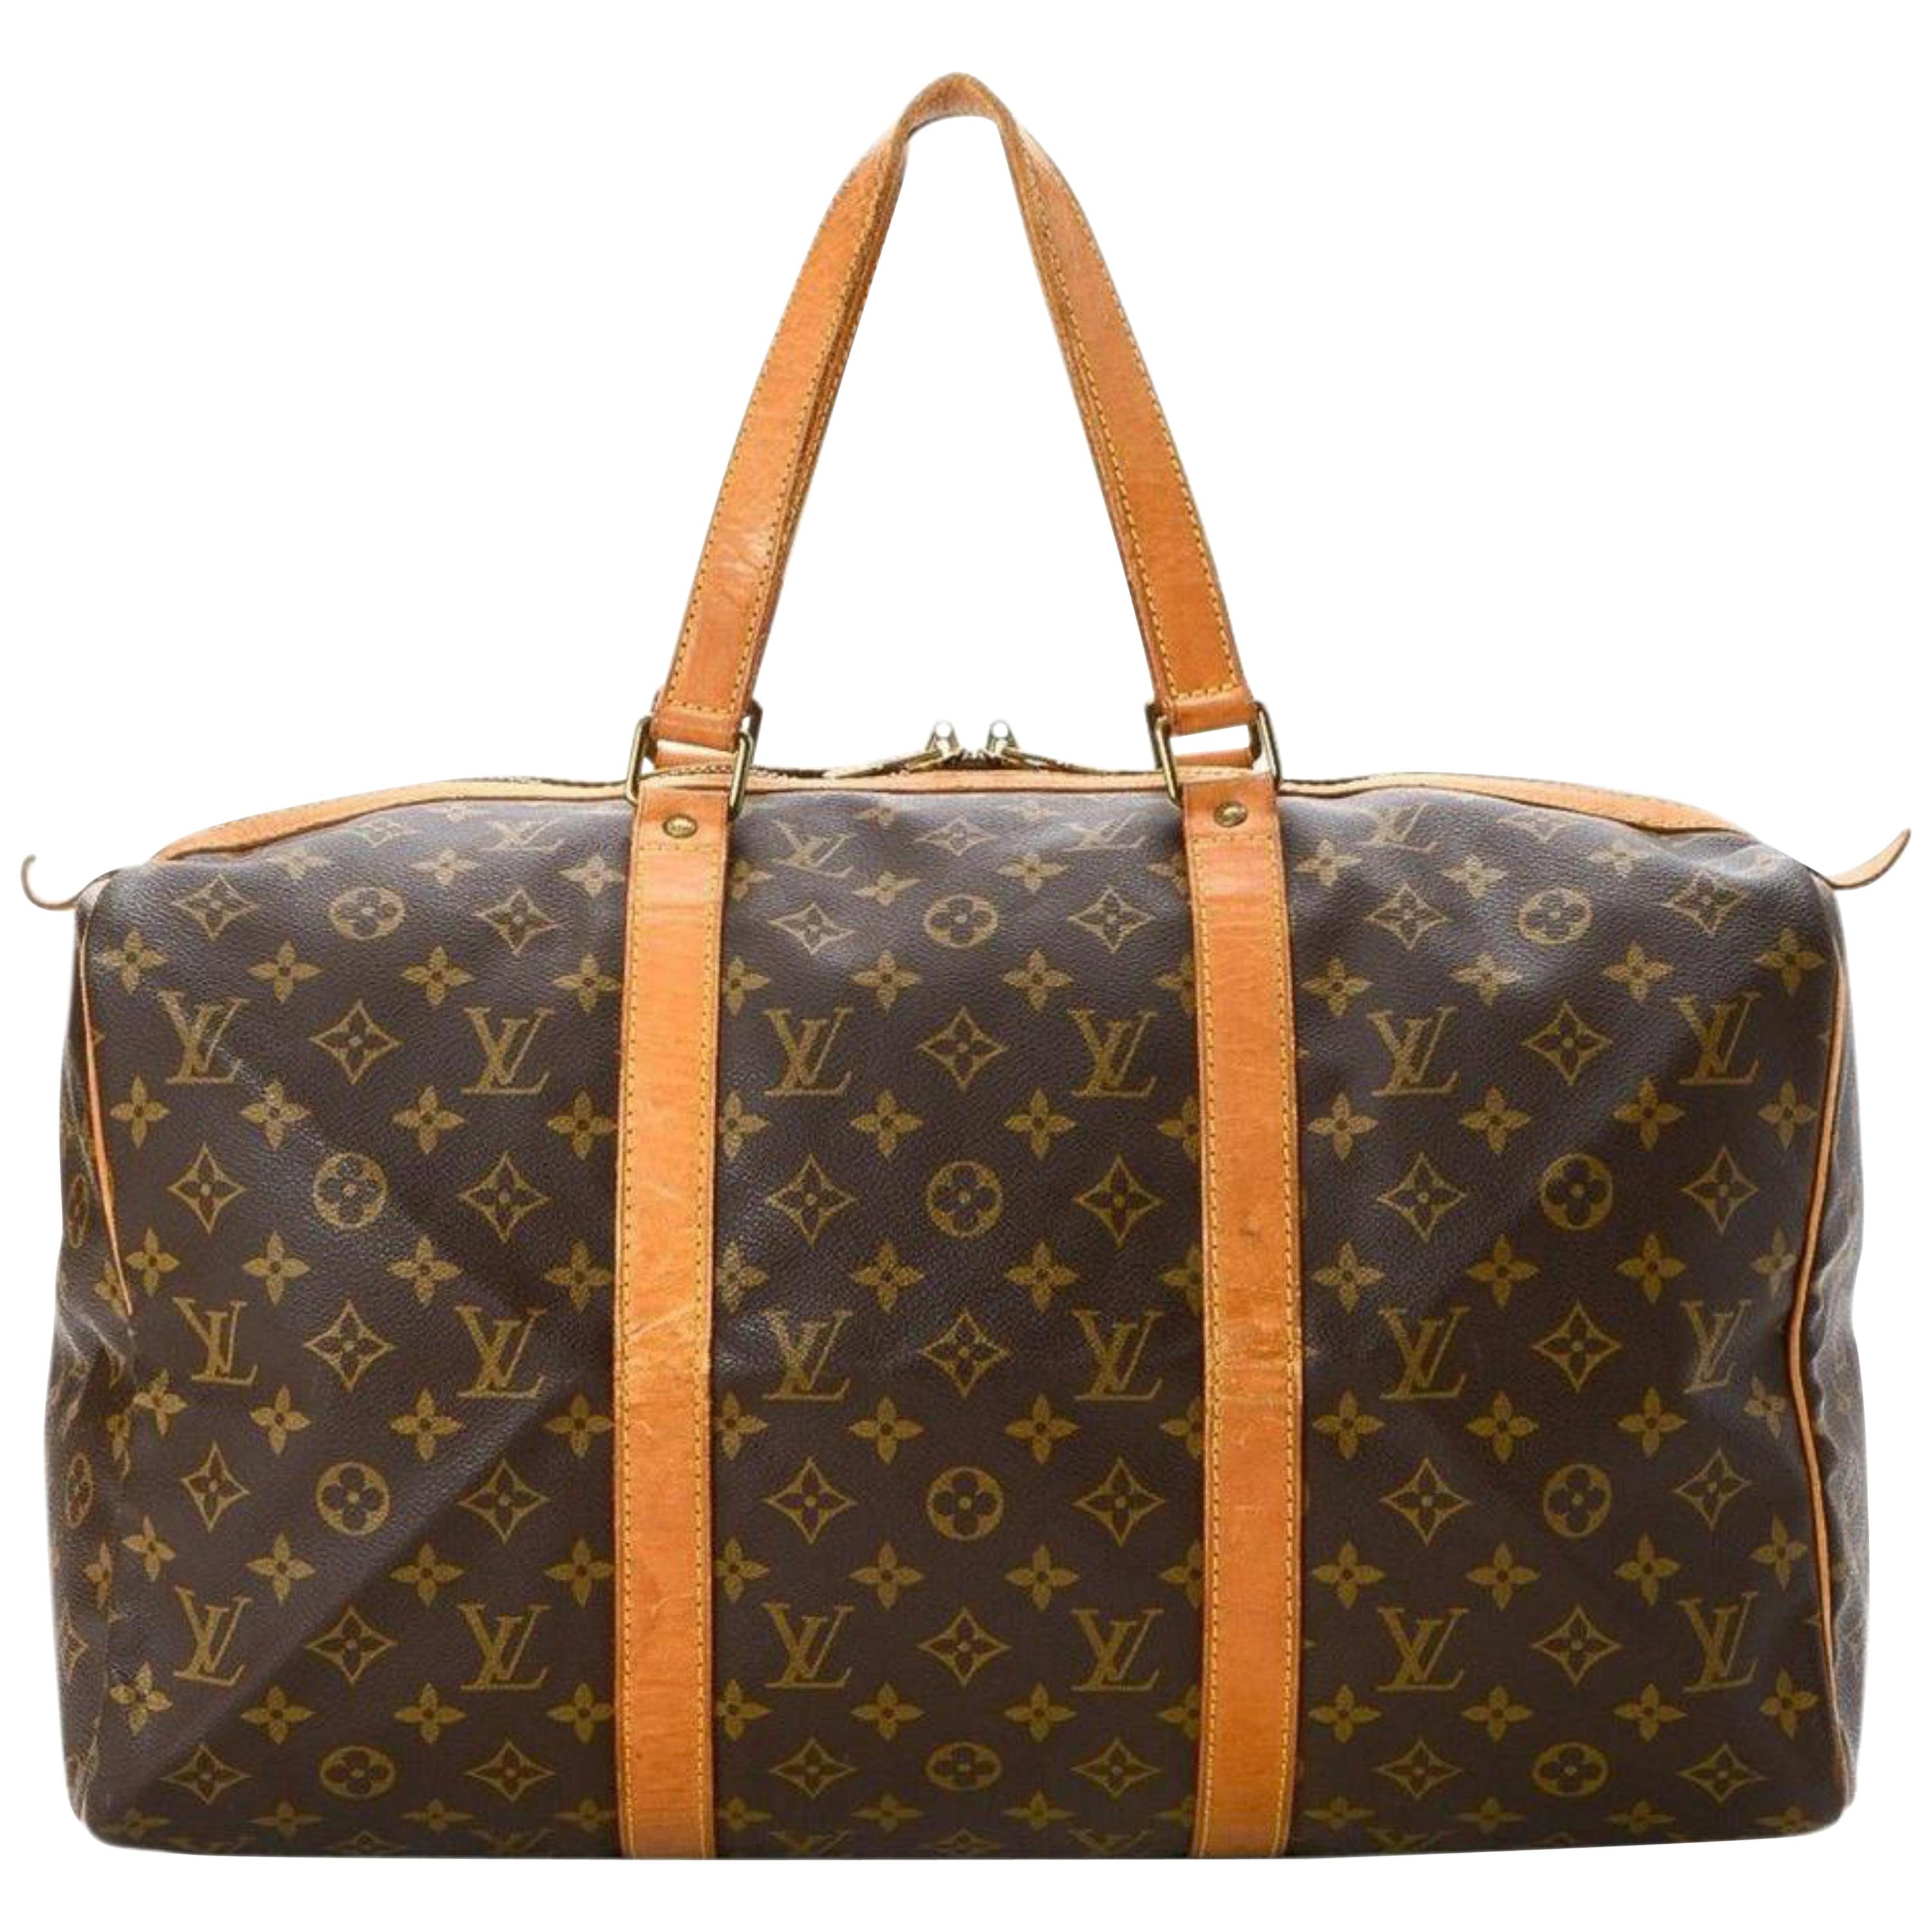 Louis Vuitton Sac Souple Monogram 45 227039 Coated Canvas Weekend/Travel Bag For Sale